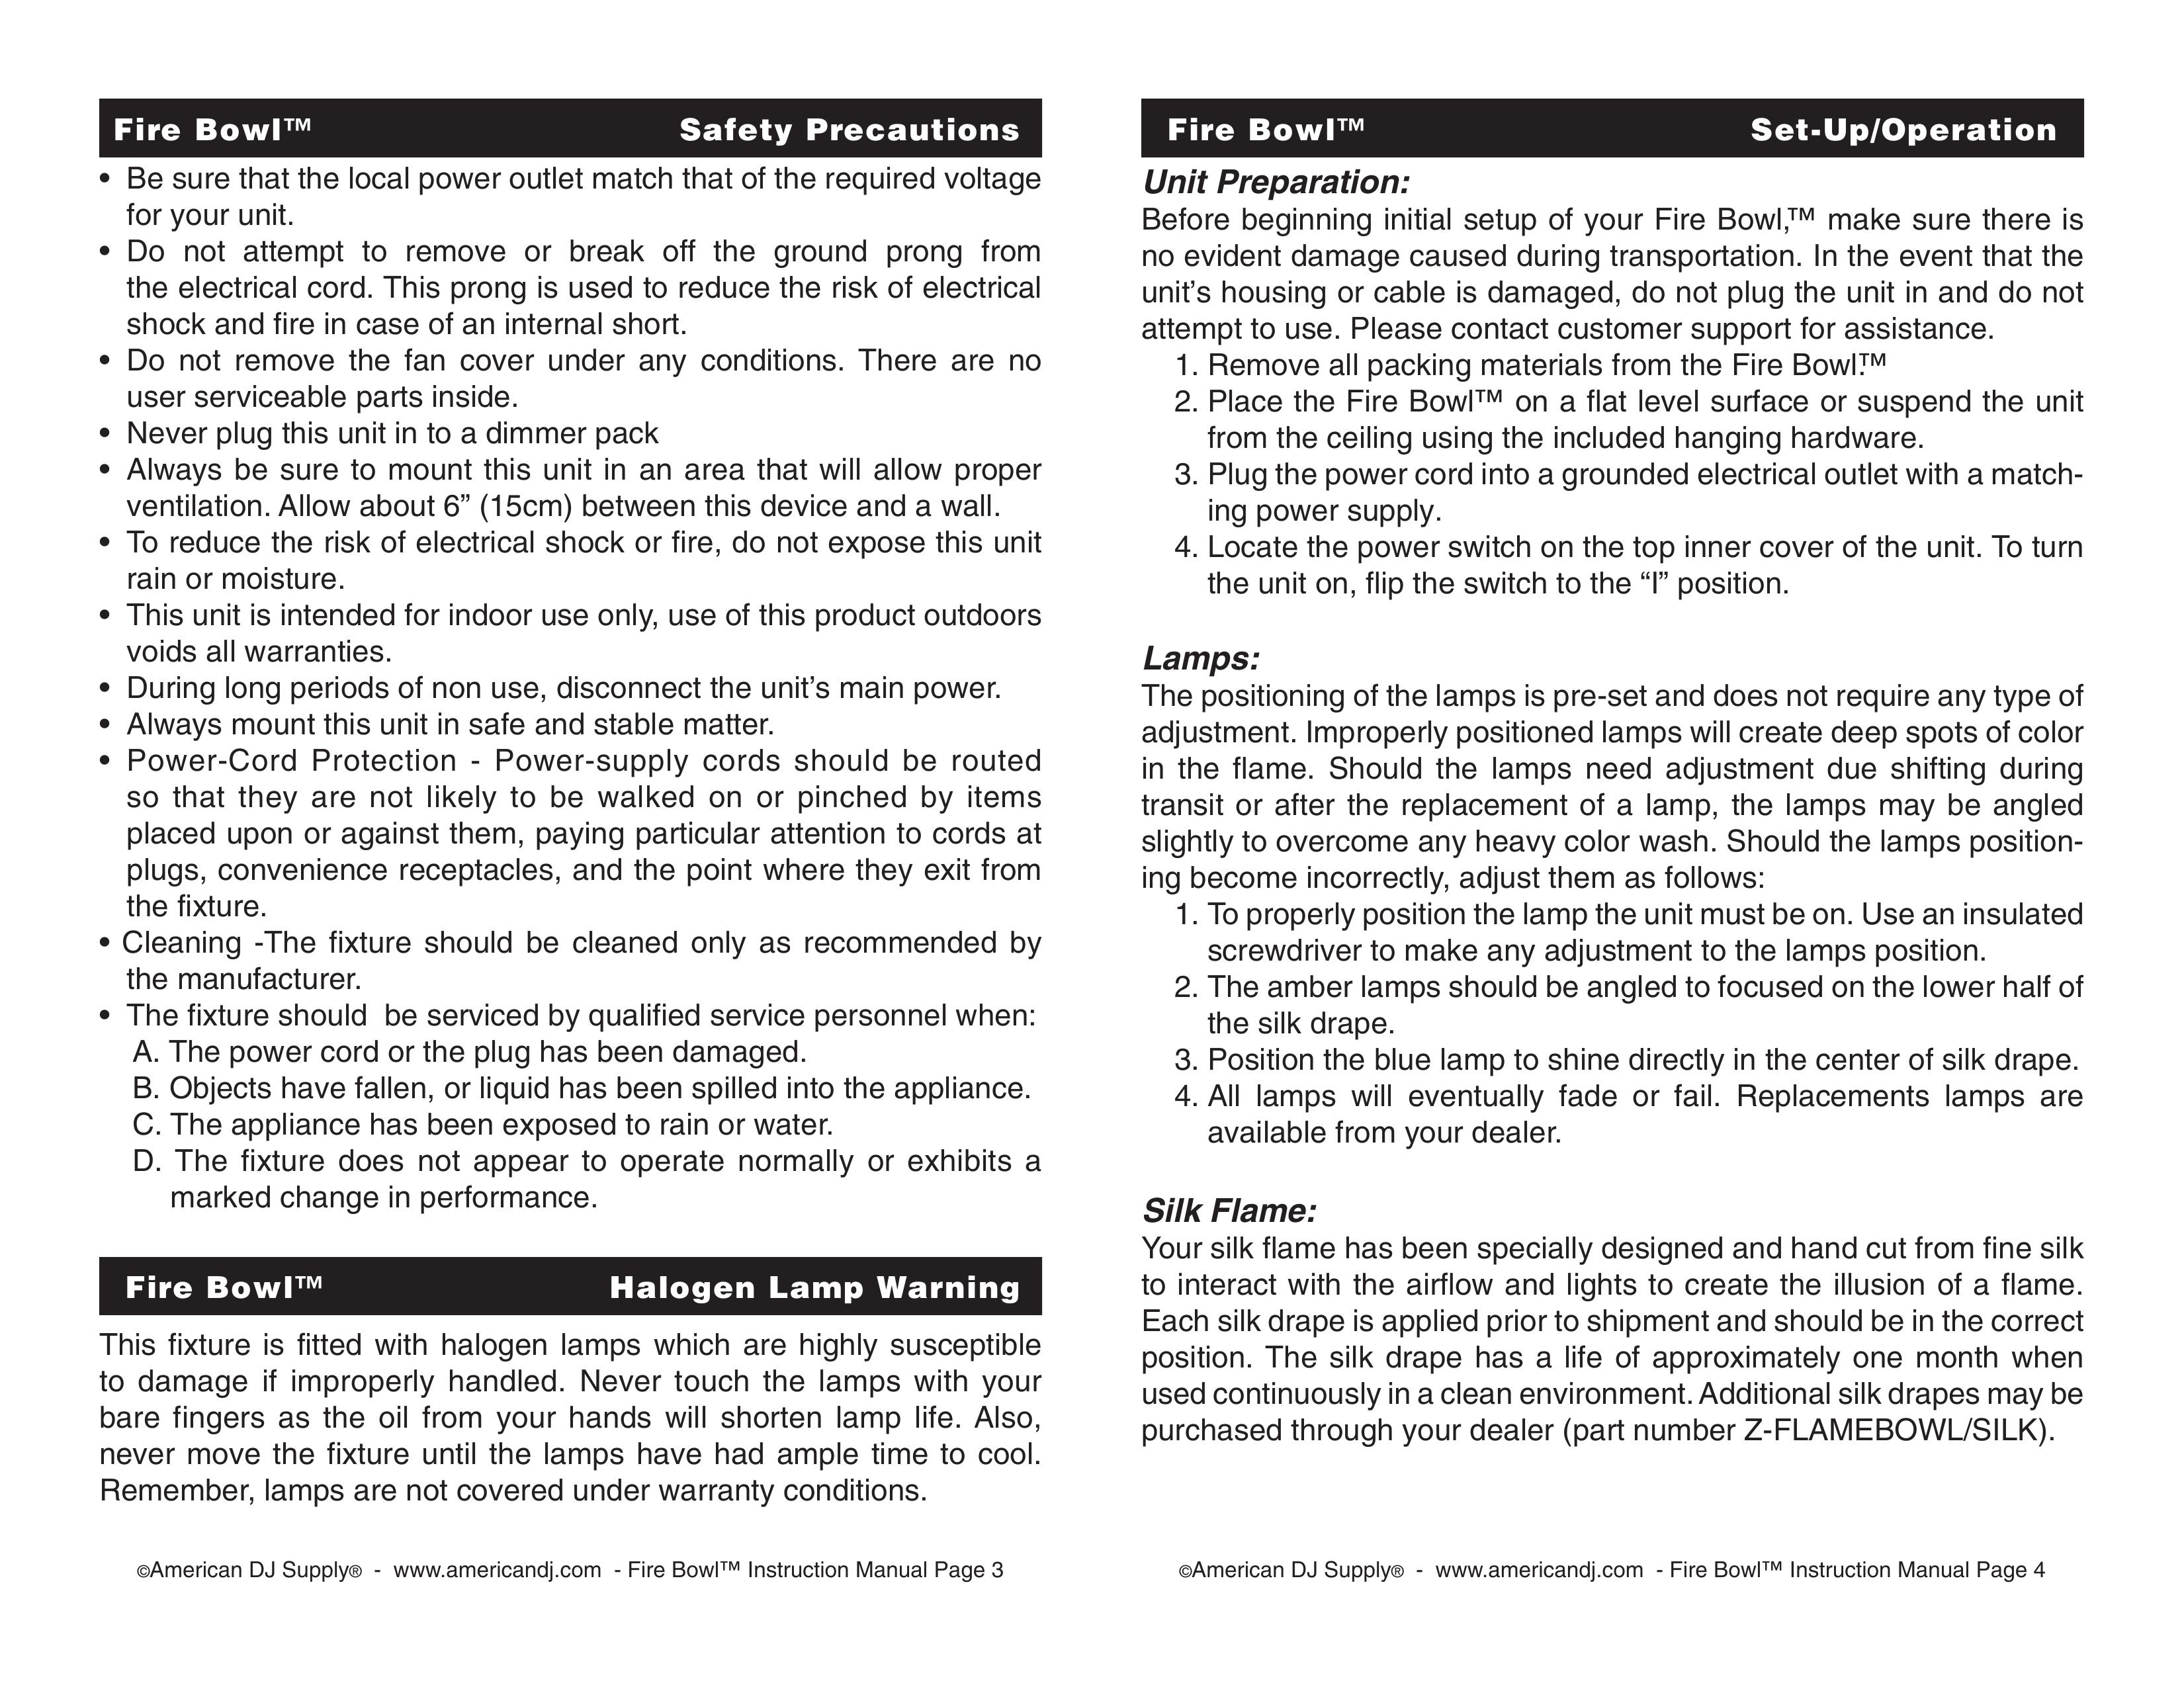 American DJ Fire Bowl DJ Equipment User Manual (Page 2)